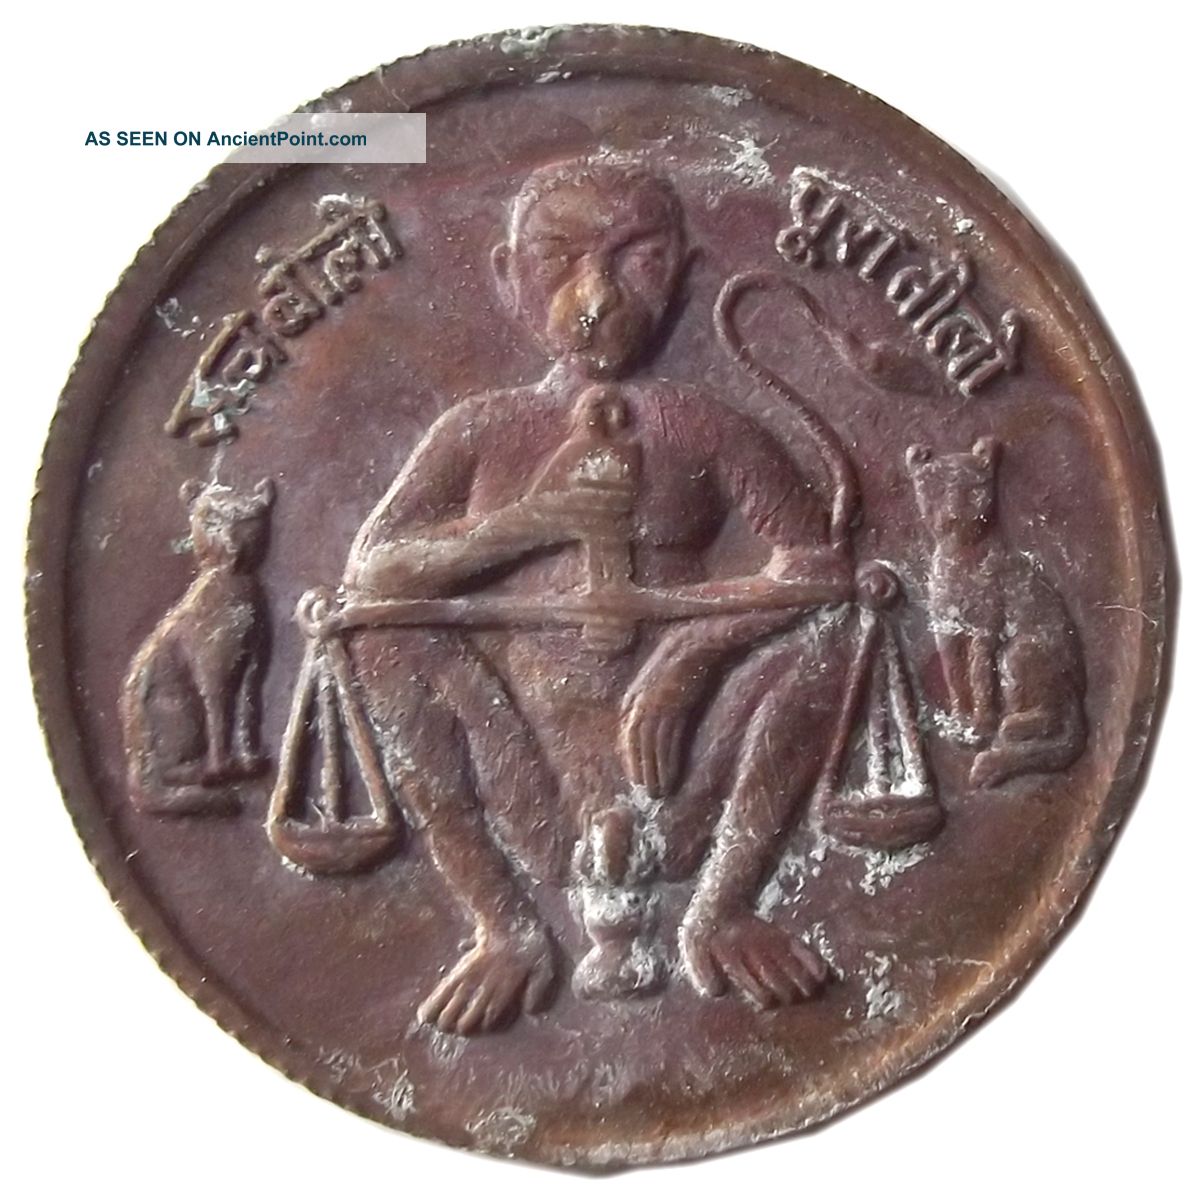 East India Company Coin Age 1818 Monkey Weighting Folk Story Of India (ce - 24) India photo